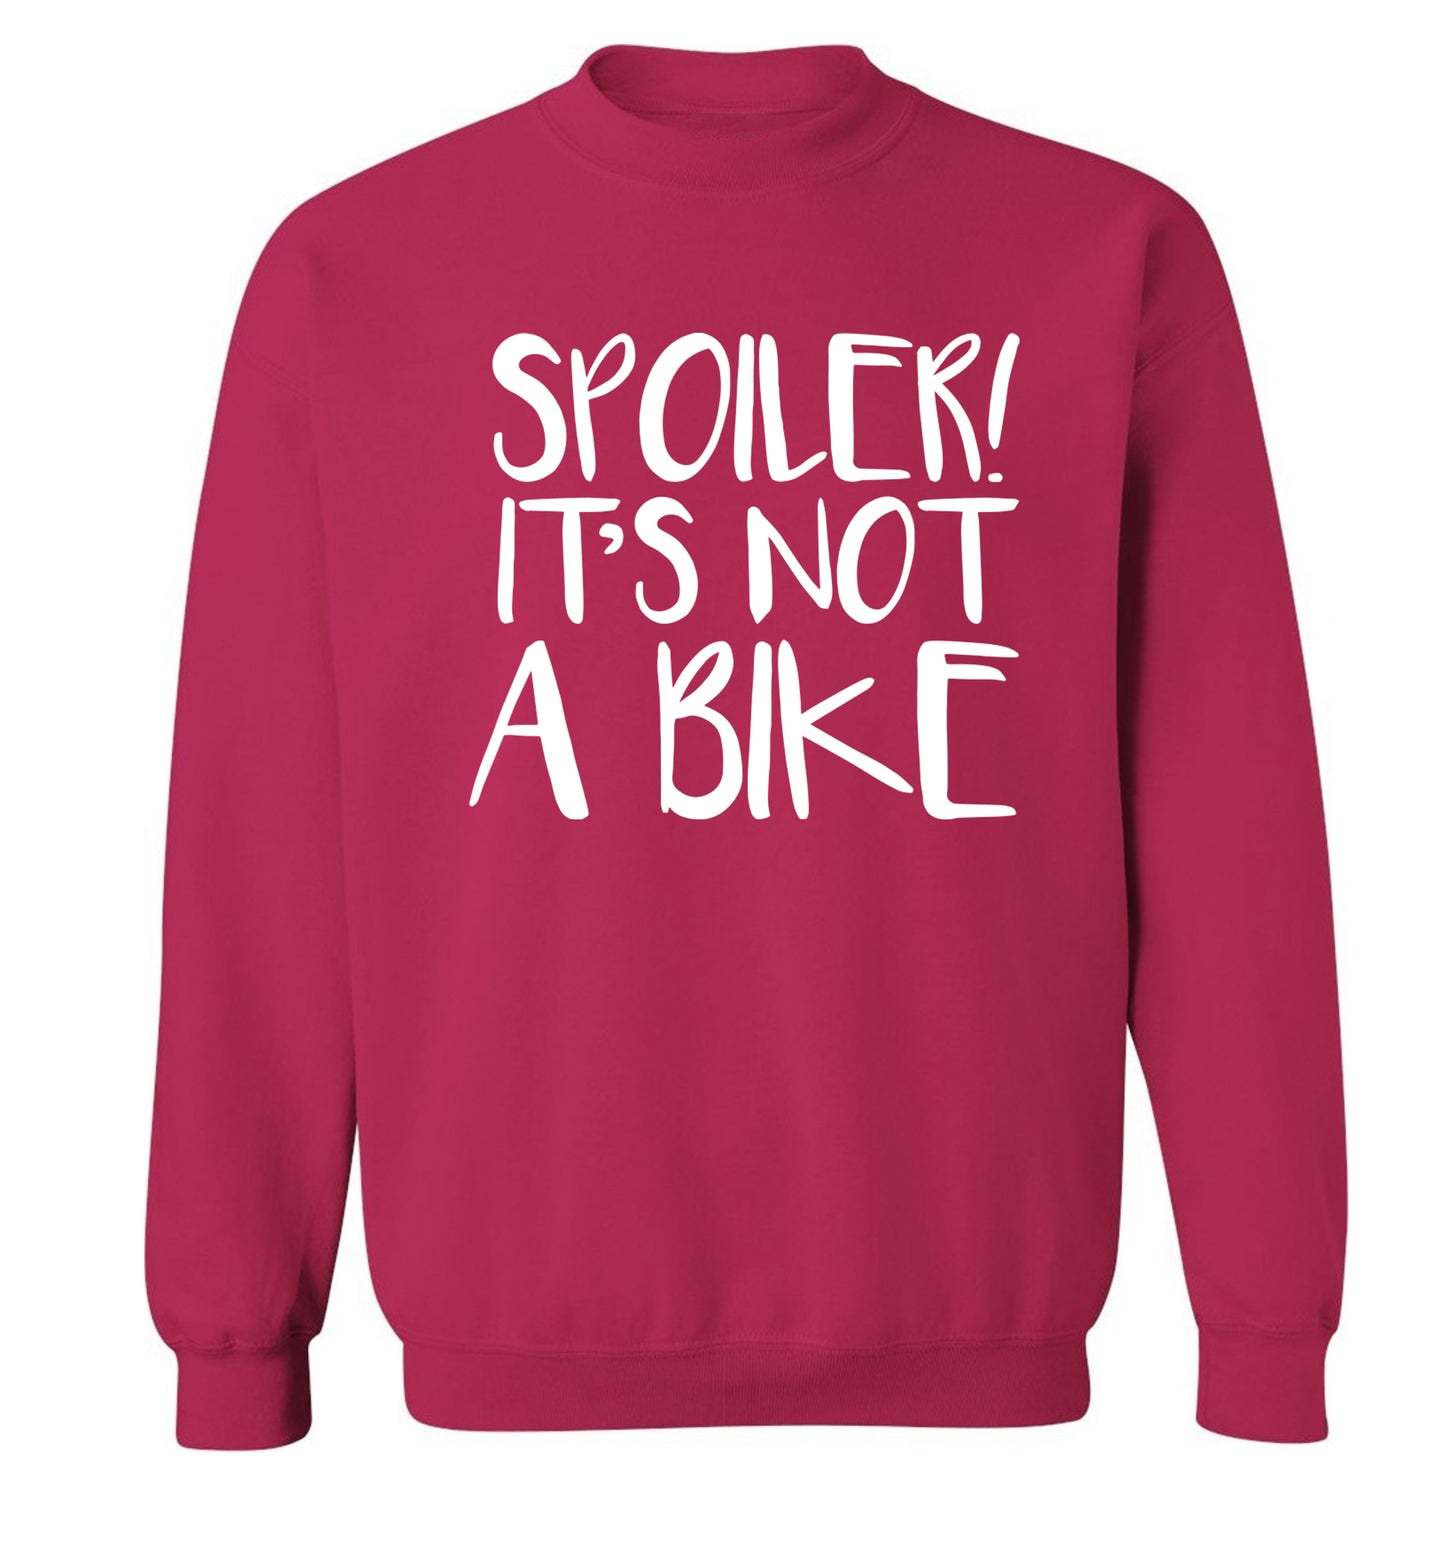 Spoiler it's not a bike Adult's unisex pink Sweater 2XL